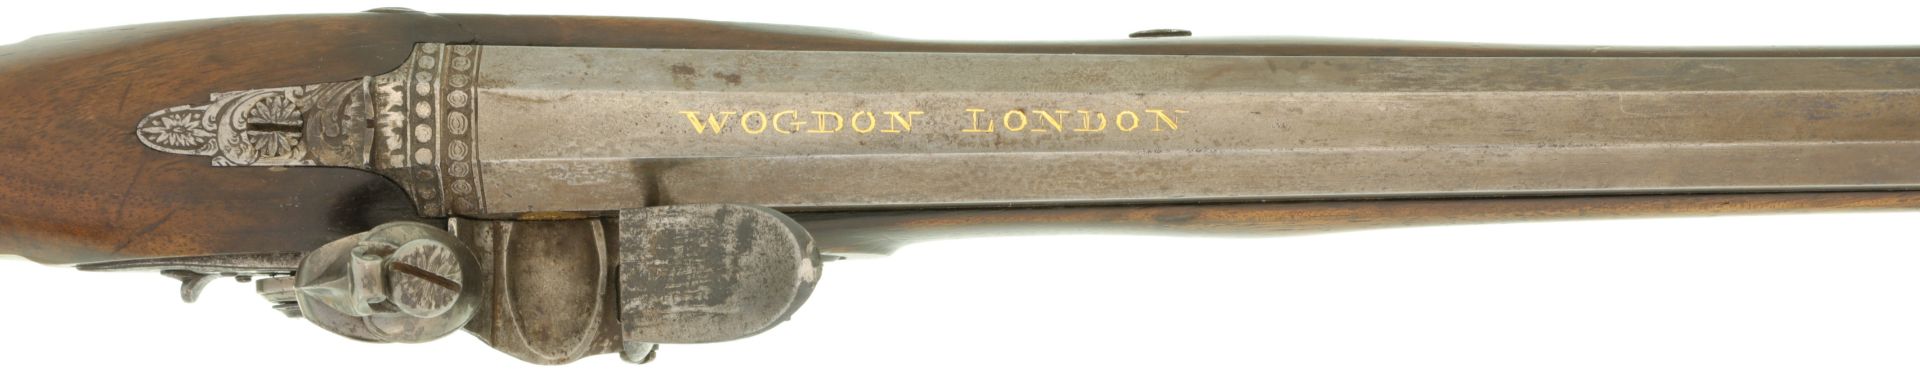 Steinschloss-Jagdpistole mit abnehmbarem Kolben, Wogdon London, Kal. 13mm - Image 7 of 9